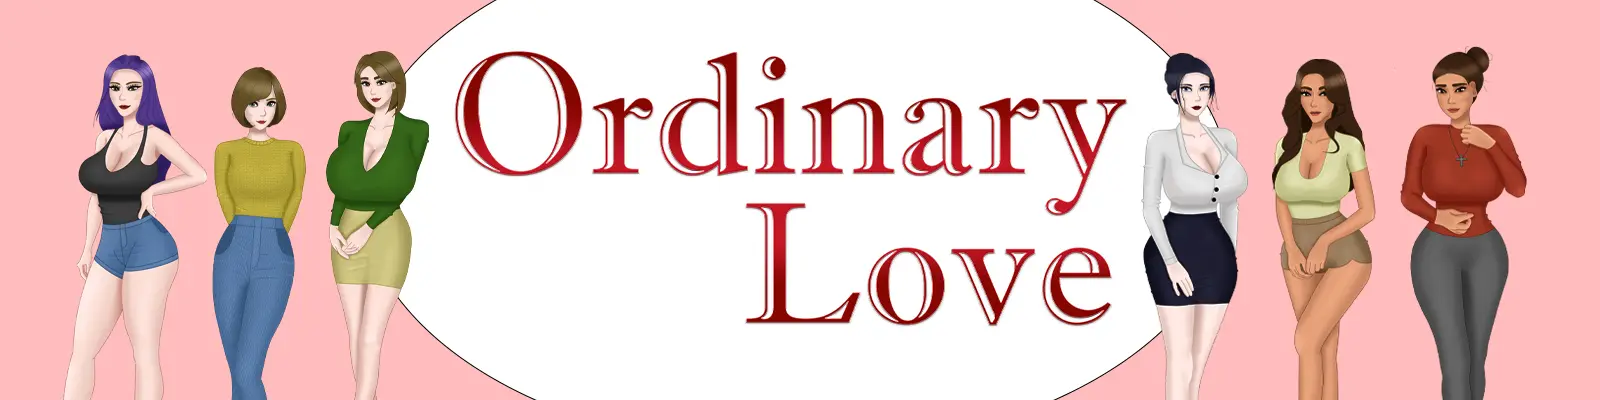 Ordinary Love main image